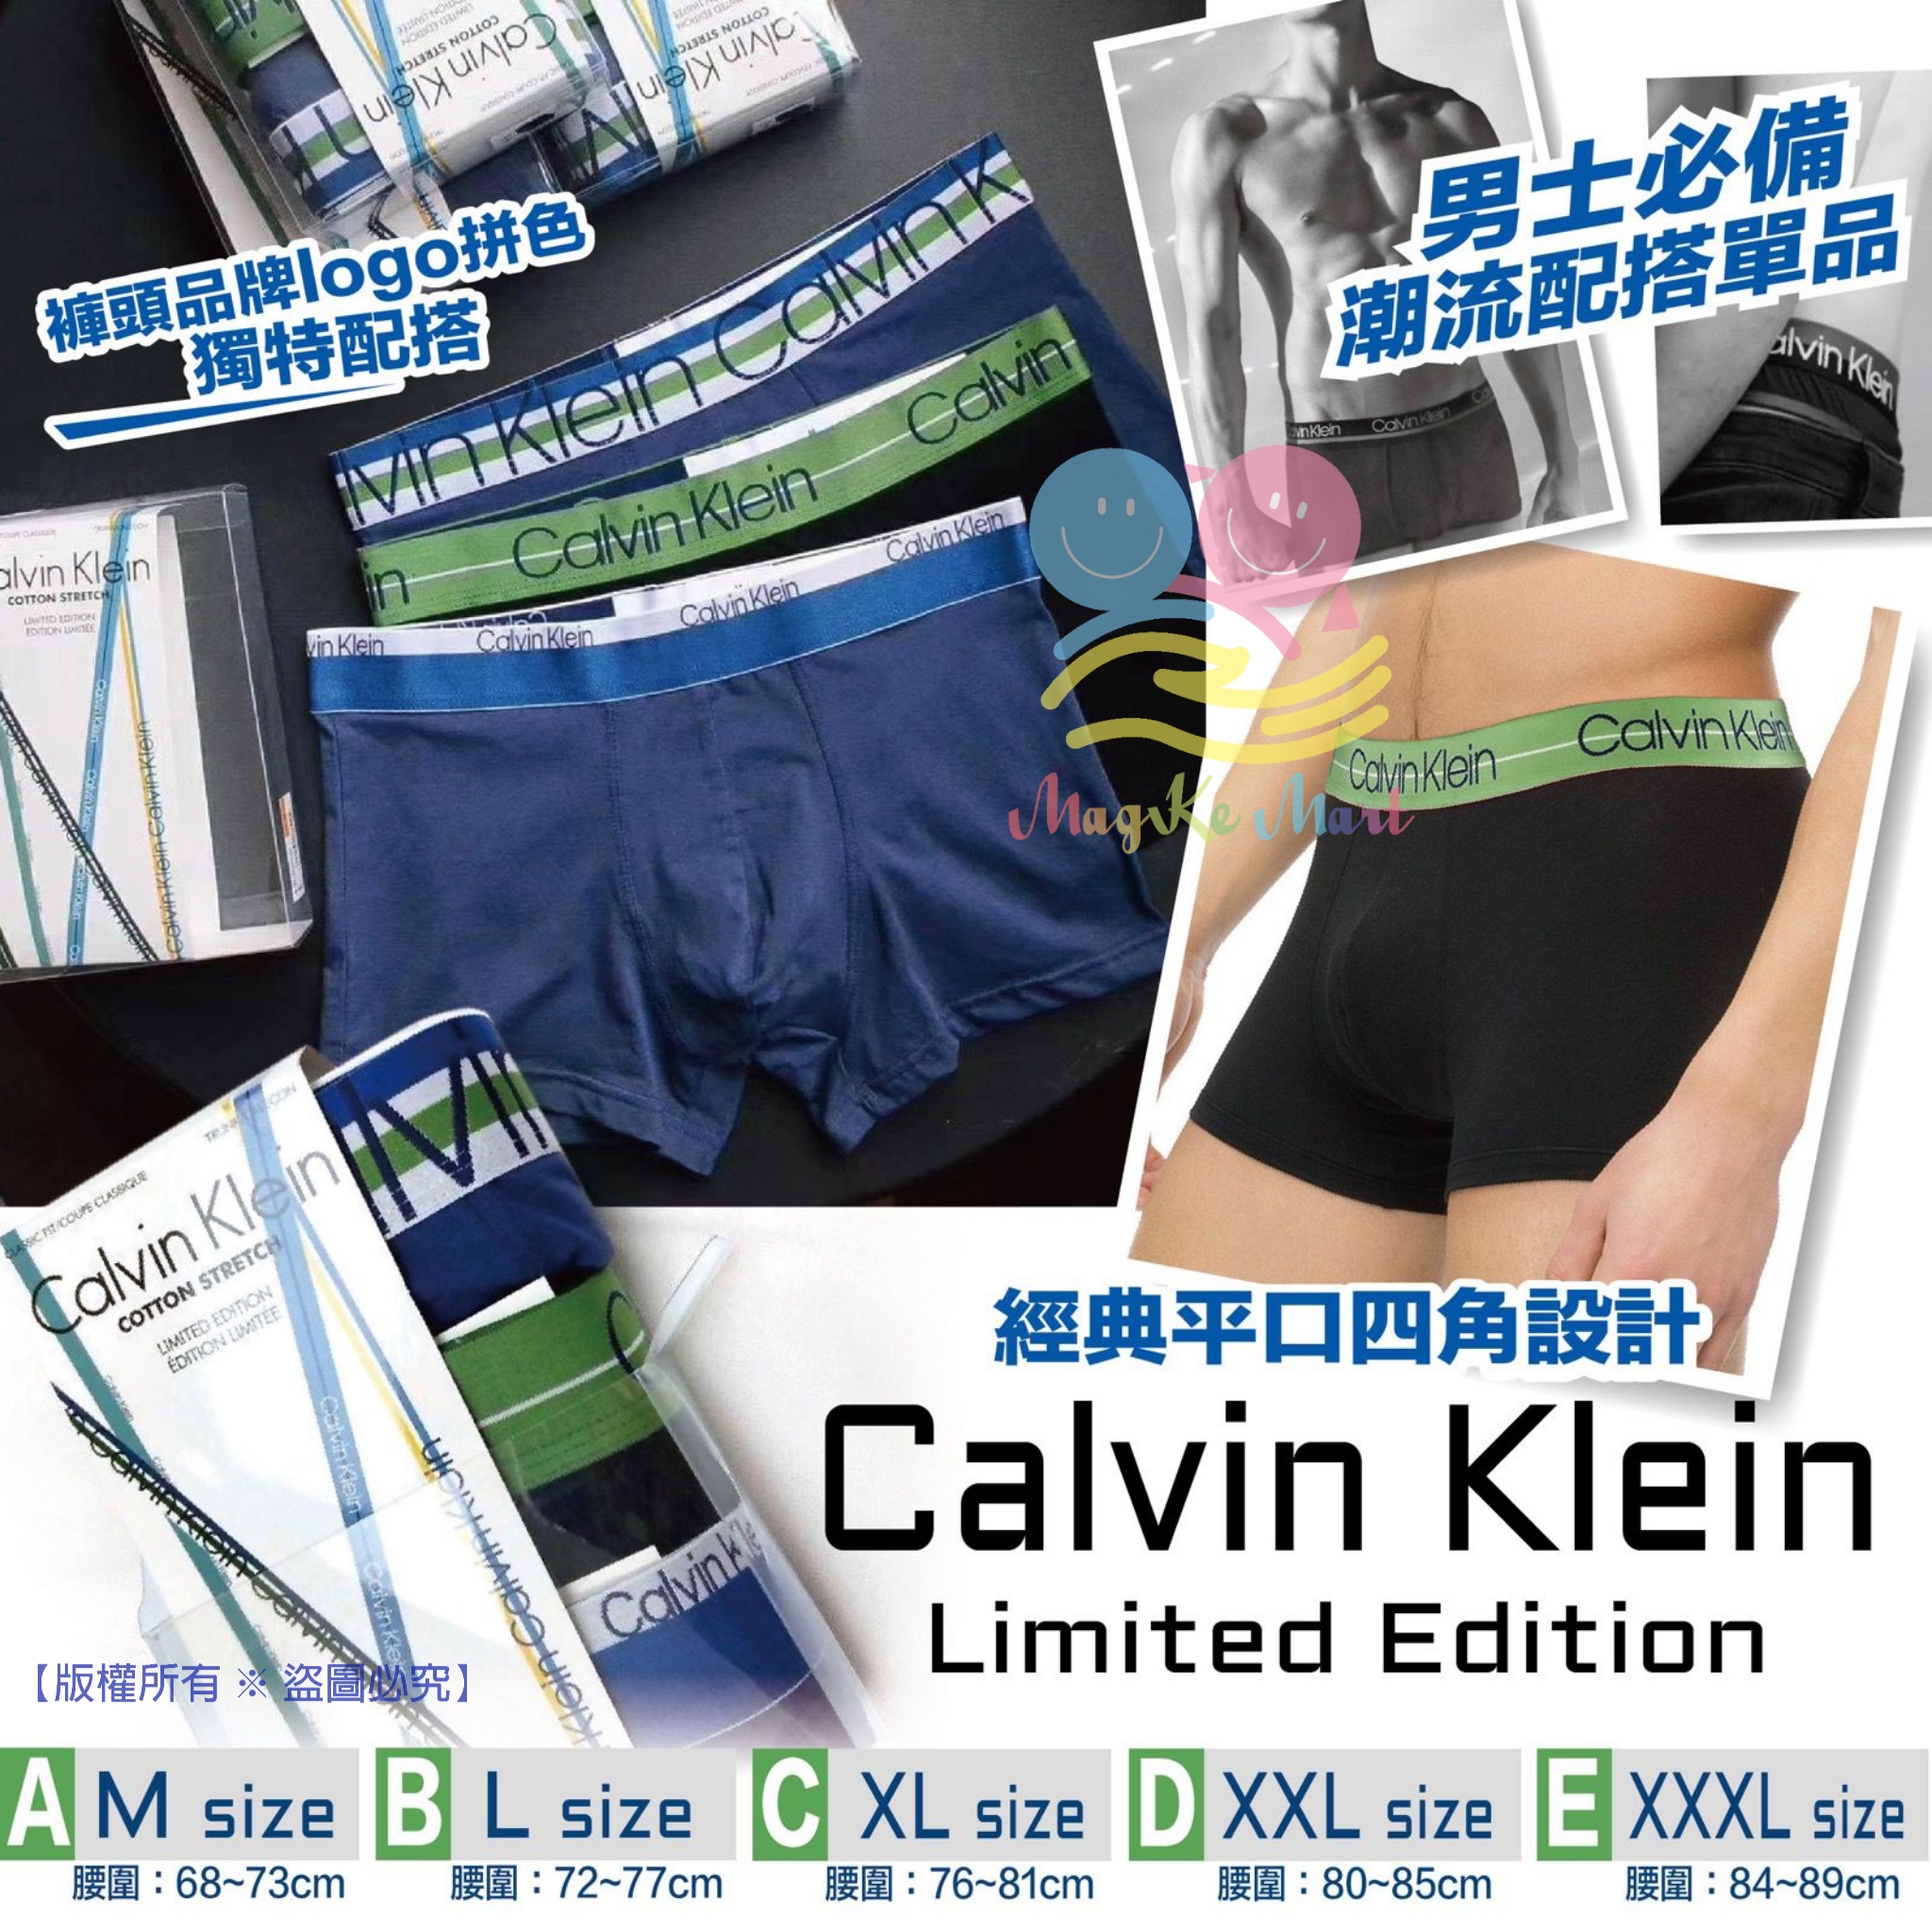 Calvin Klein 平口四角設計男裝內褲(1盒3件) (E) XXXL size